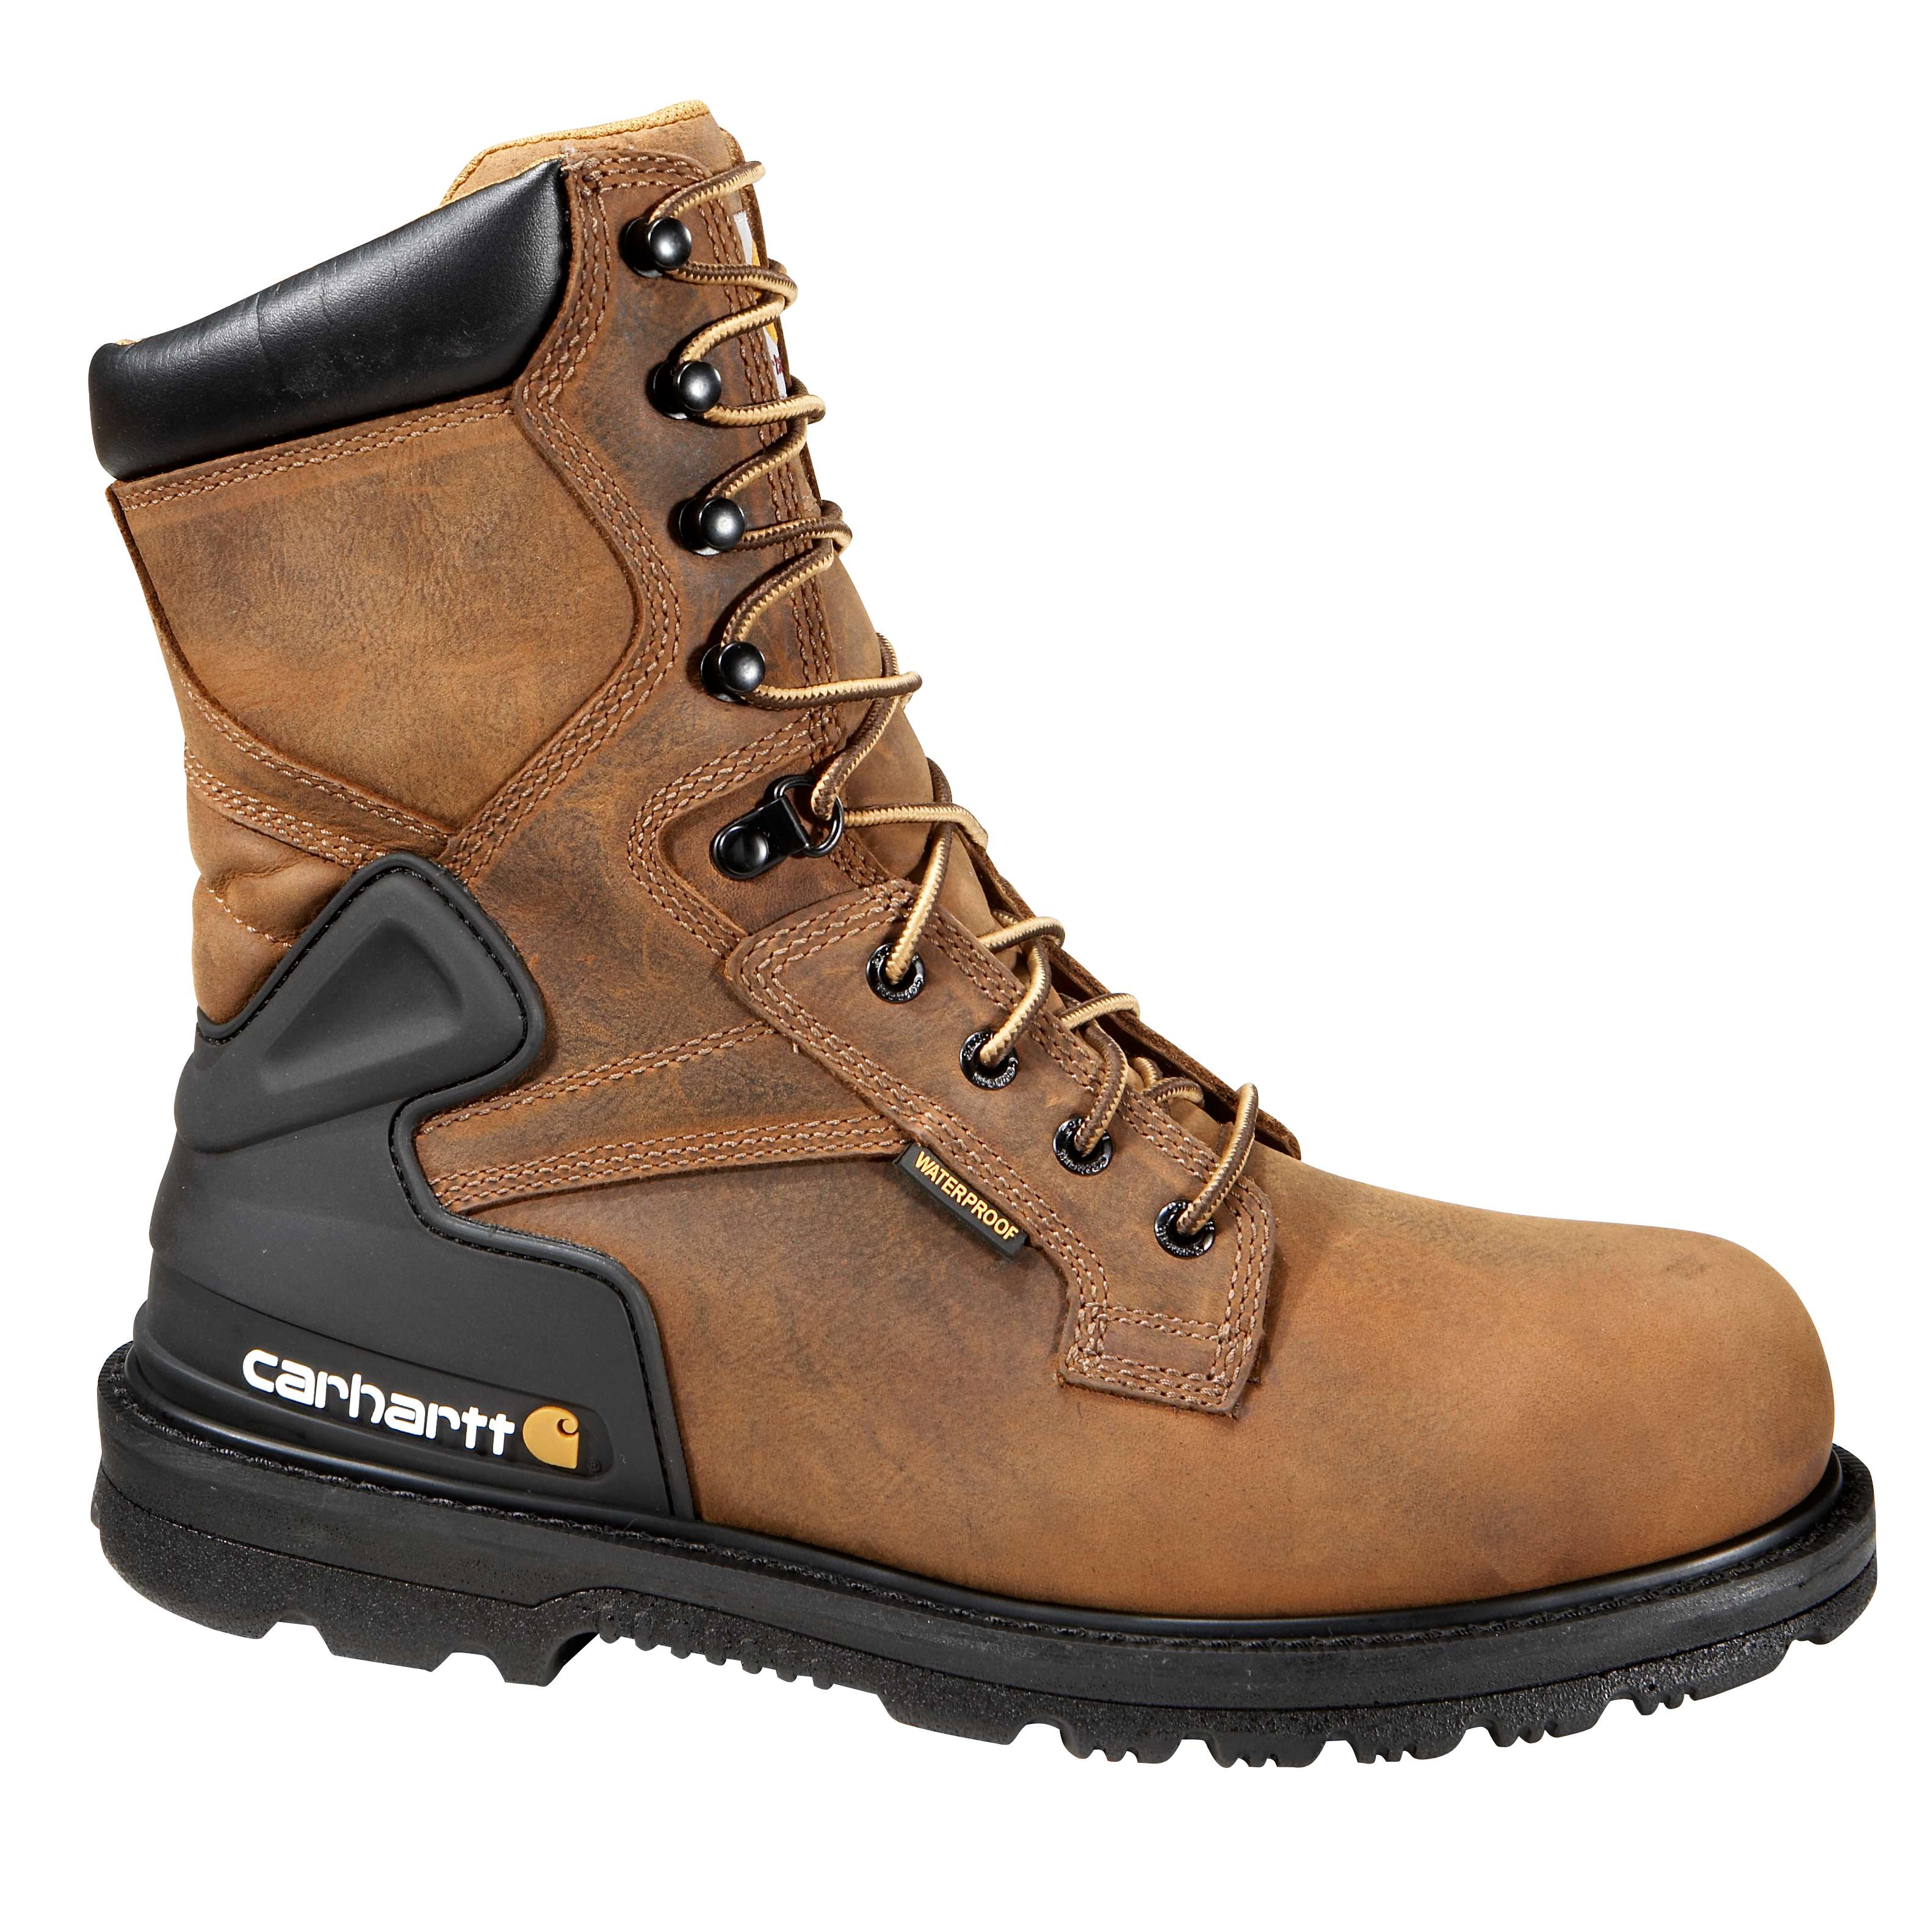 men's non steel toe work boots